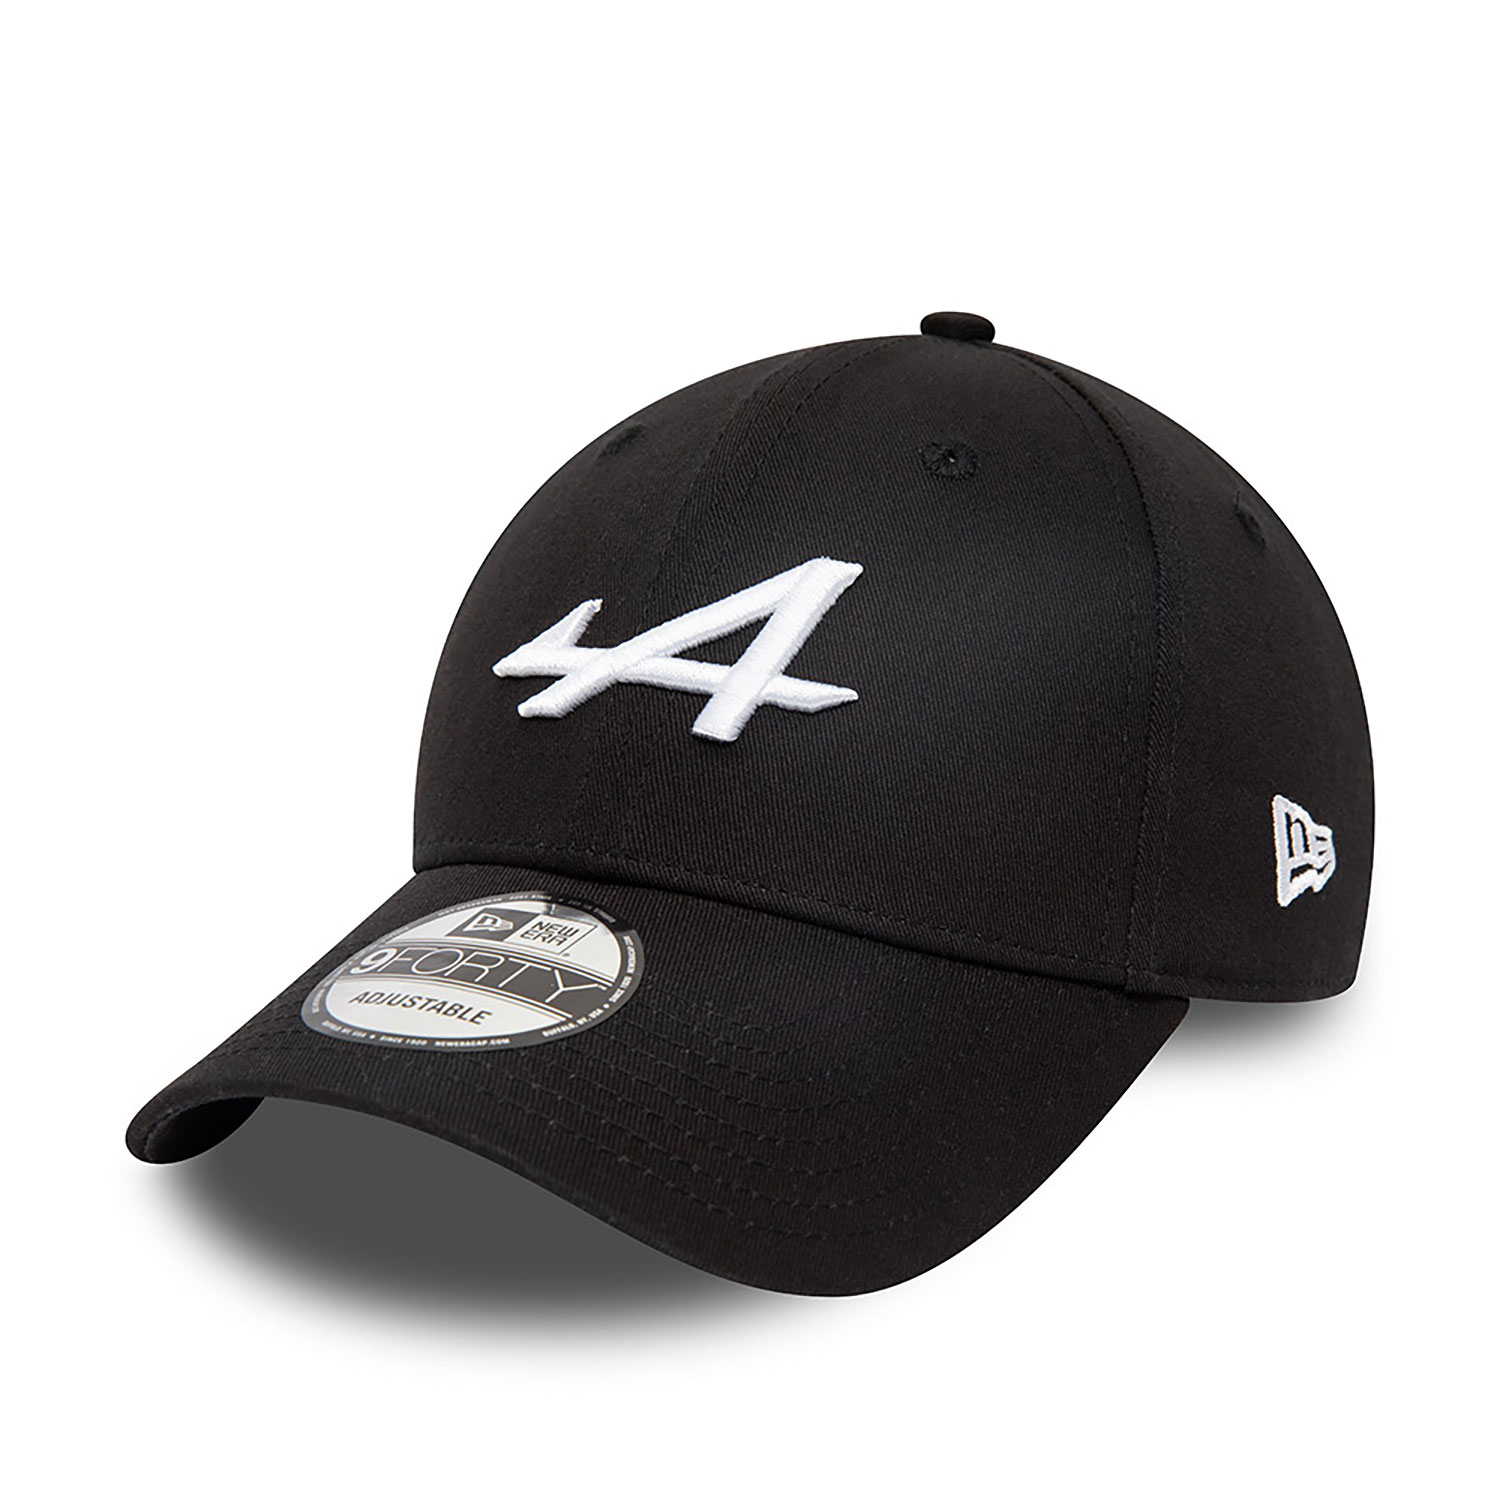 Alpine Essential Black 9FORTY Adjustable Cap